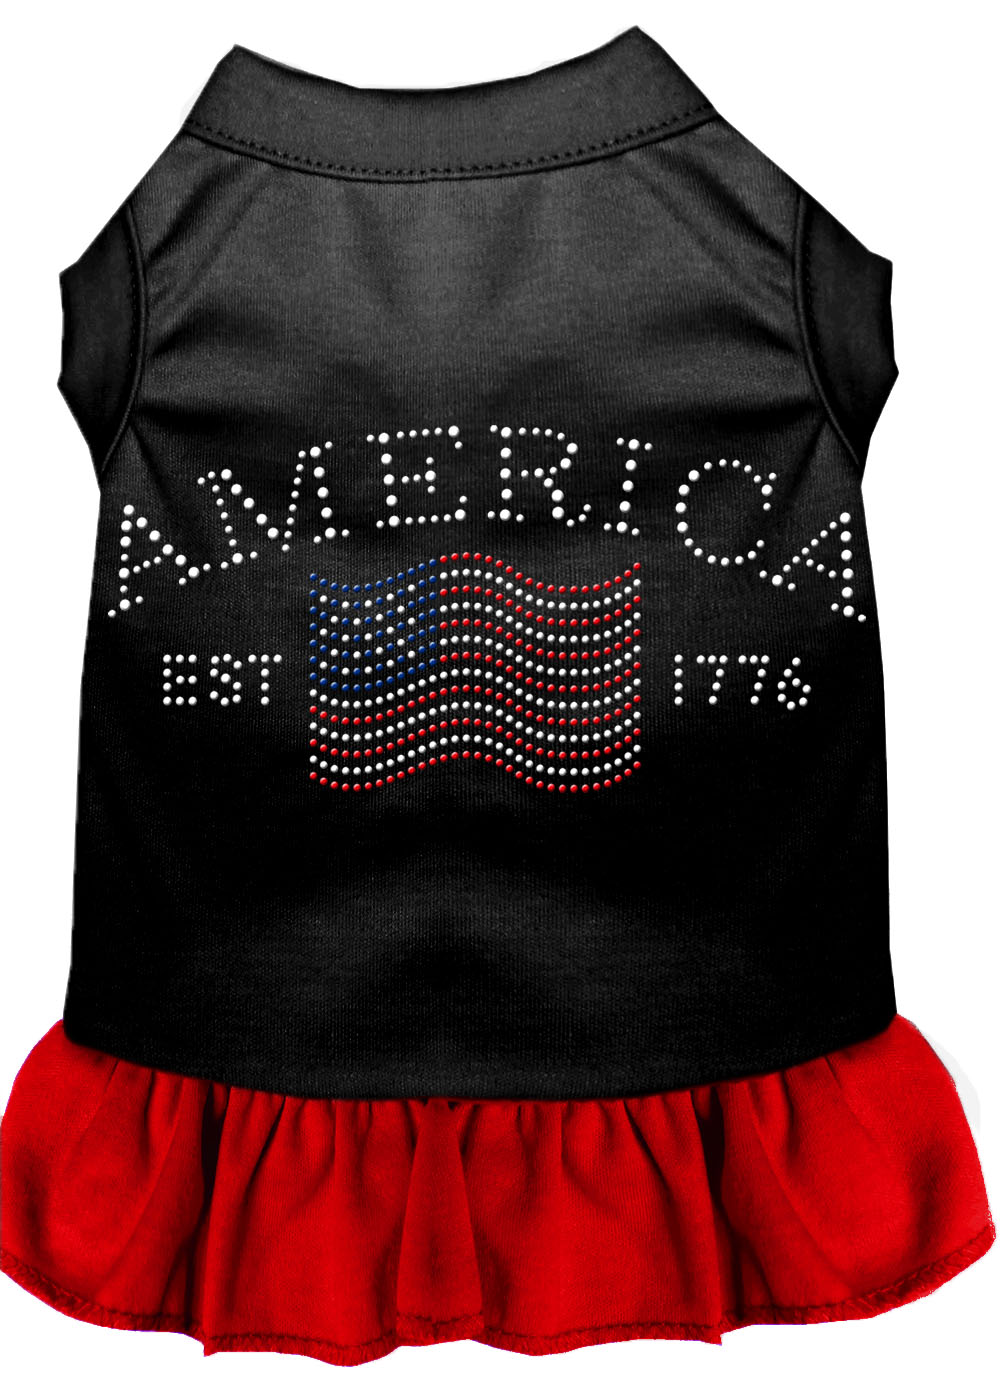 Classic America Rhinestone Dress Black with Red XS